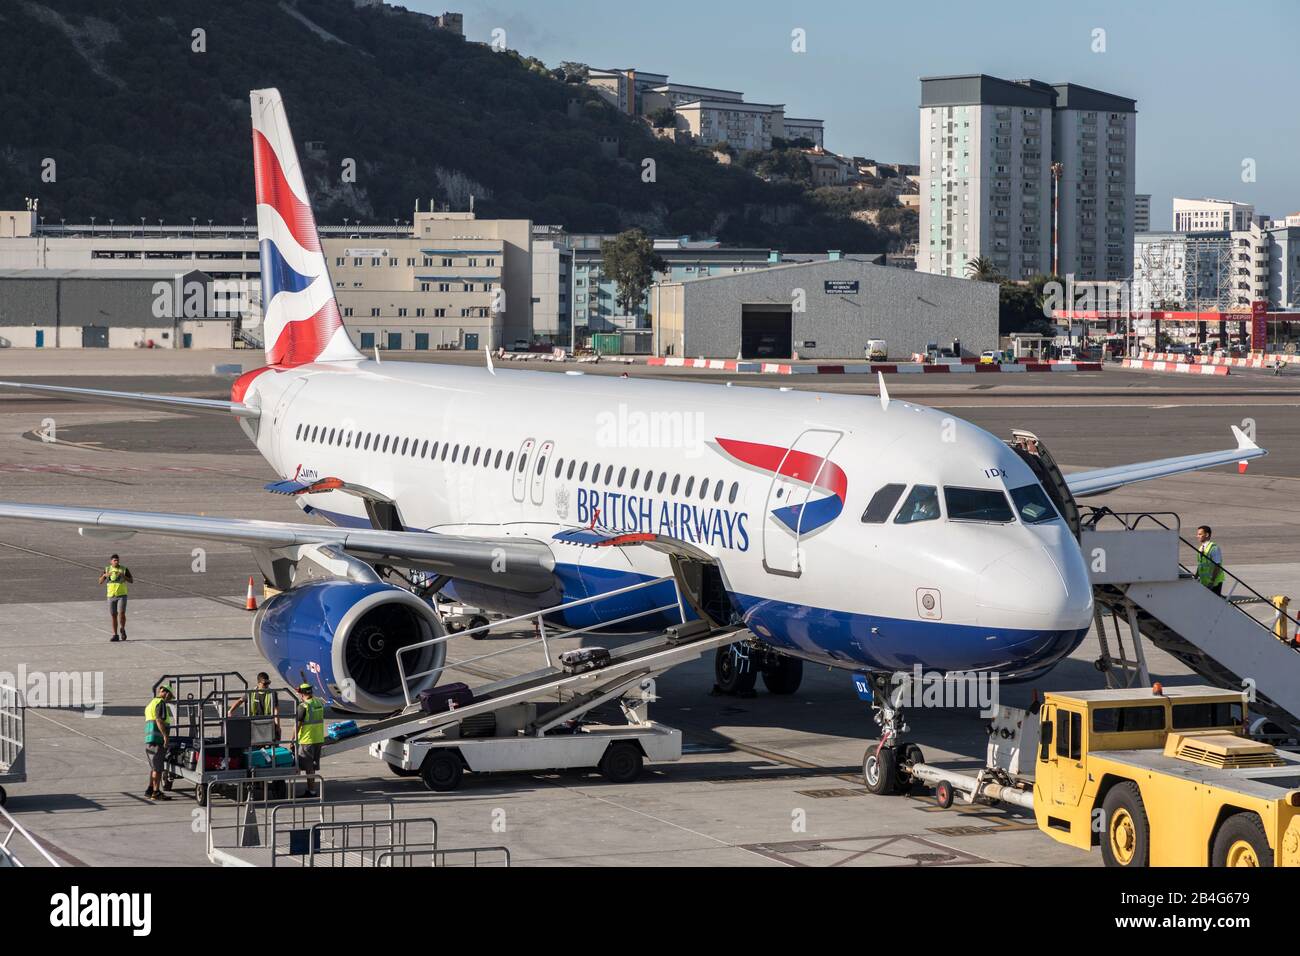 British Airways plane unloading luggage, airport, Gibraltar Stock Photo